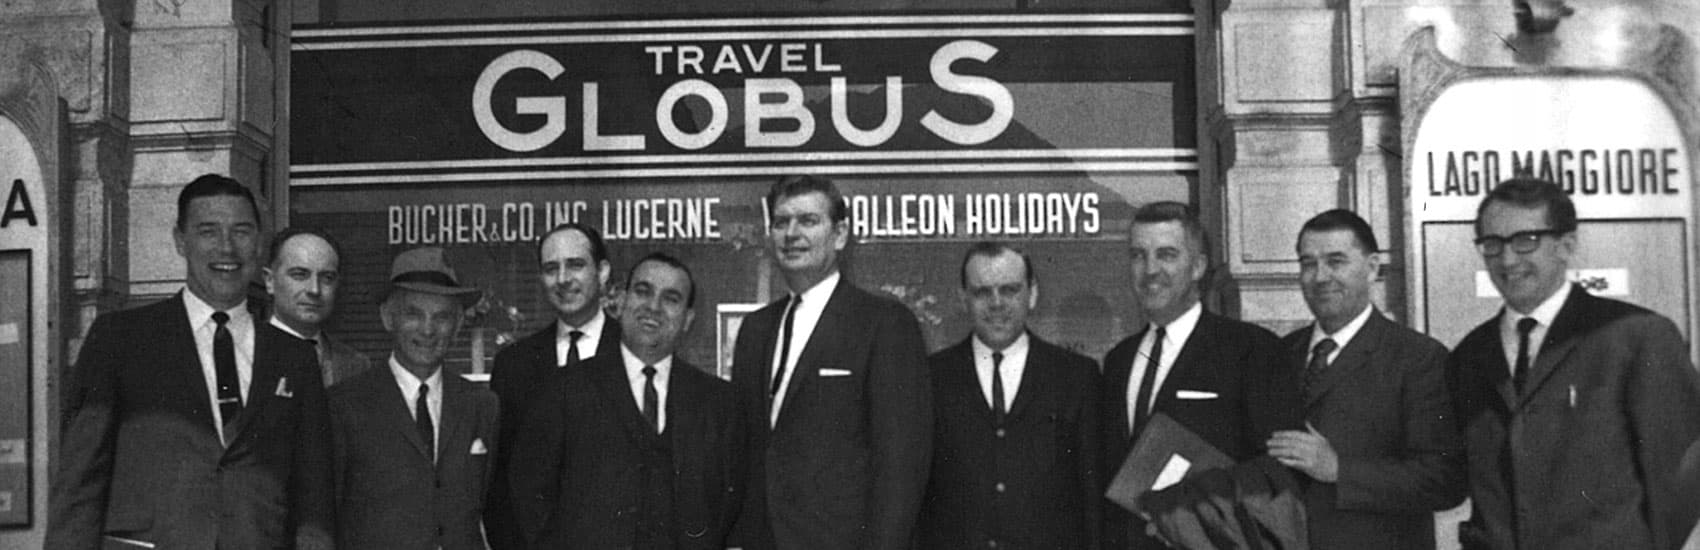 globus tour directors